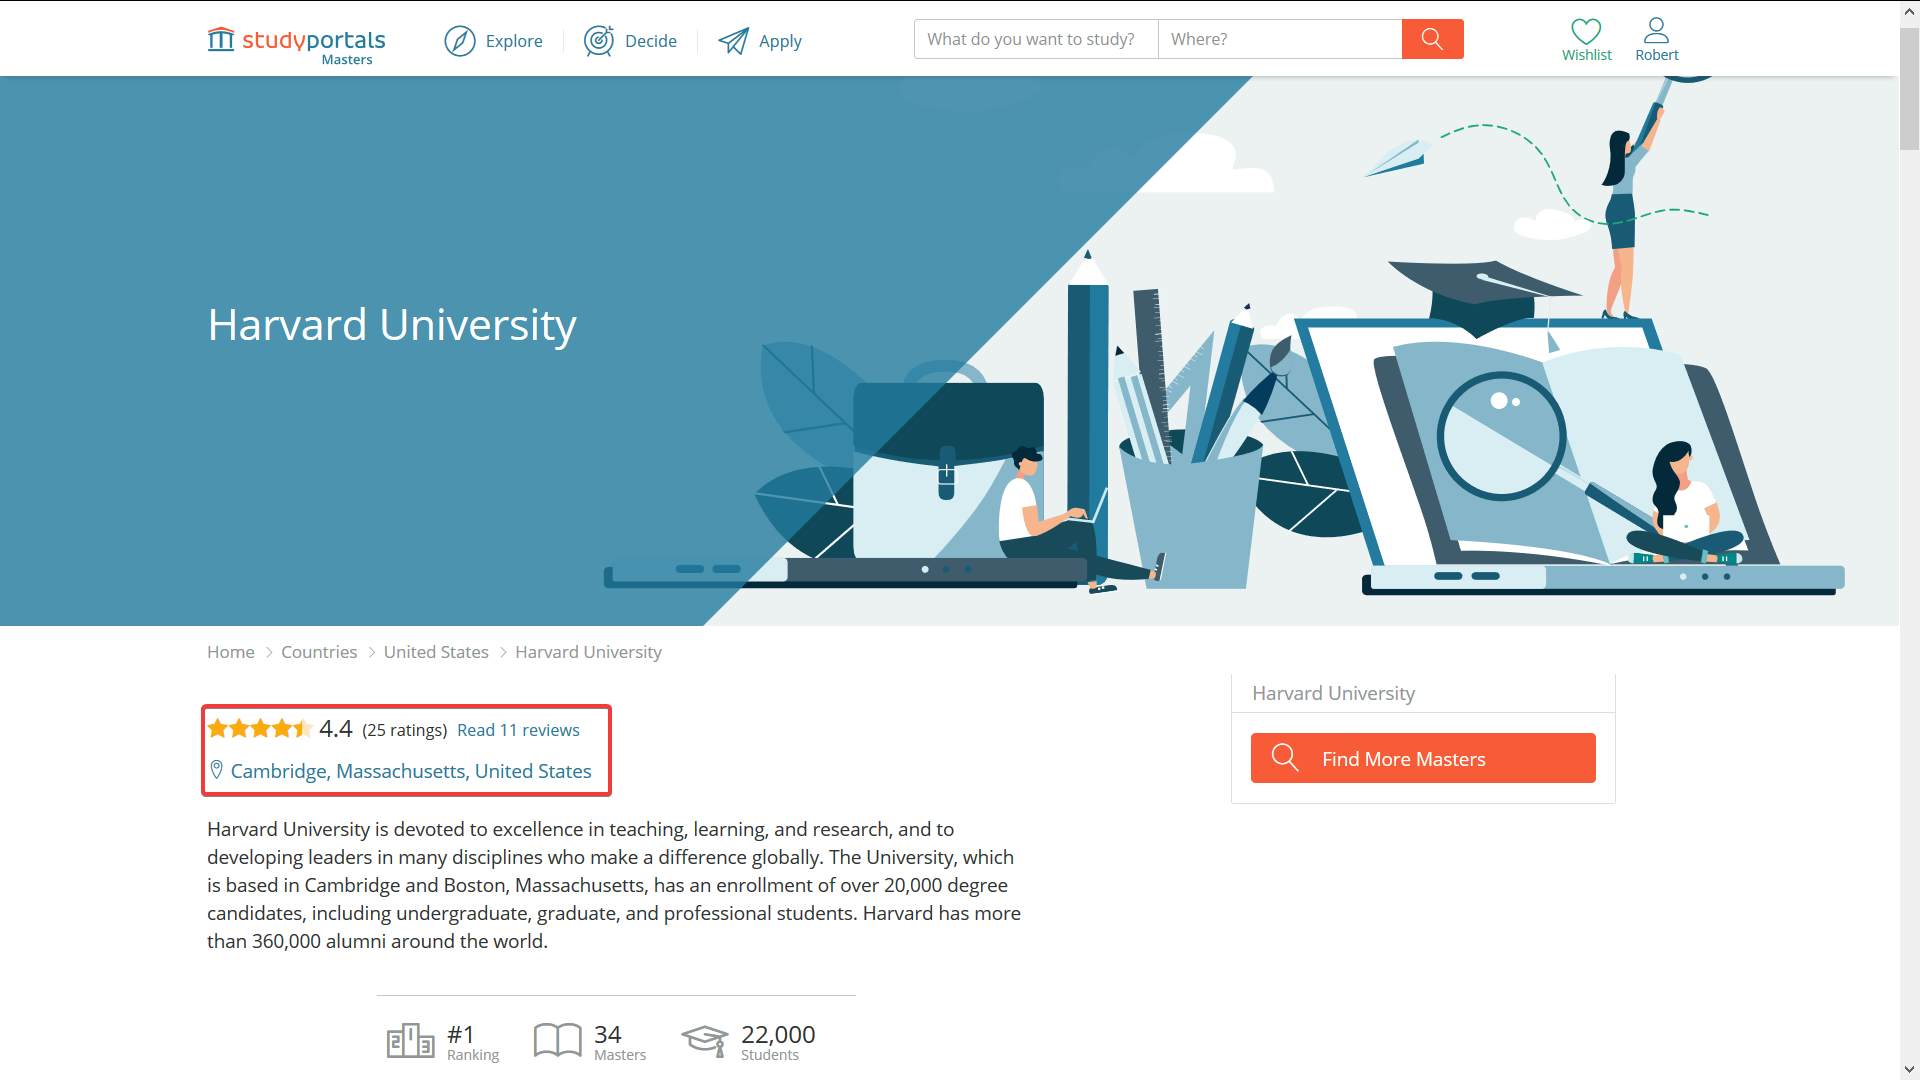 Student reviews of universities on Studyportals' websites